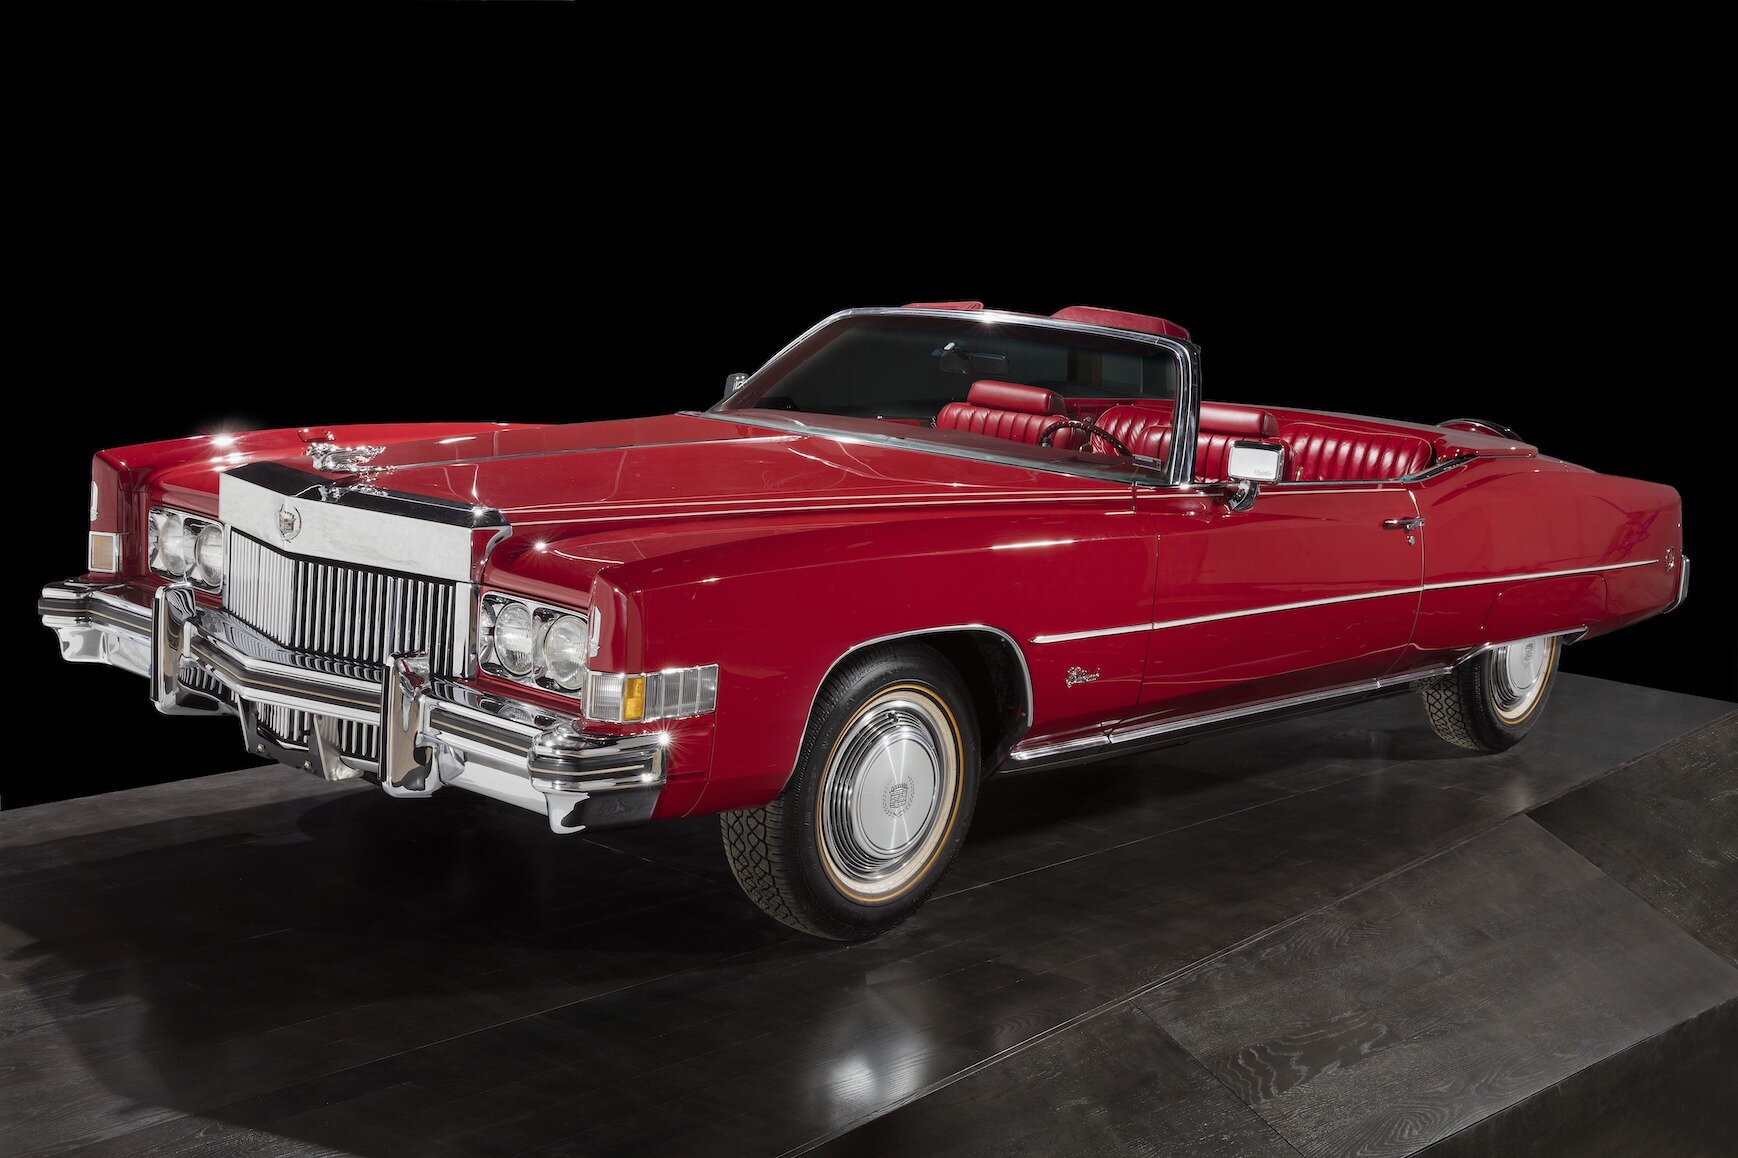 Red Cadillac Eldorado owned by Chuck Berry 1973  (Copy) (Copy)